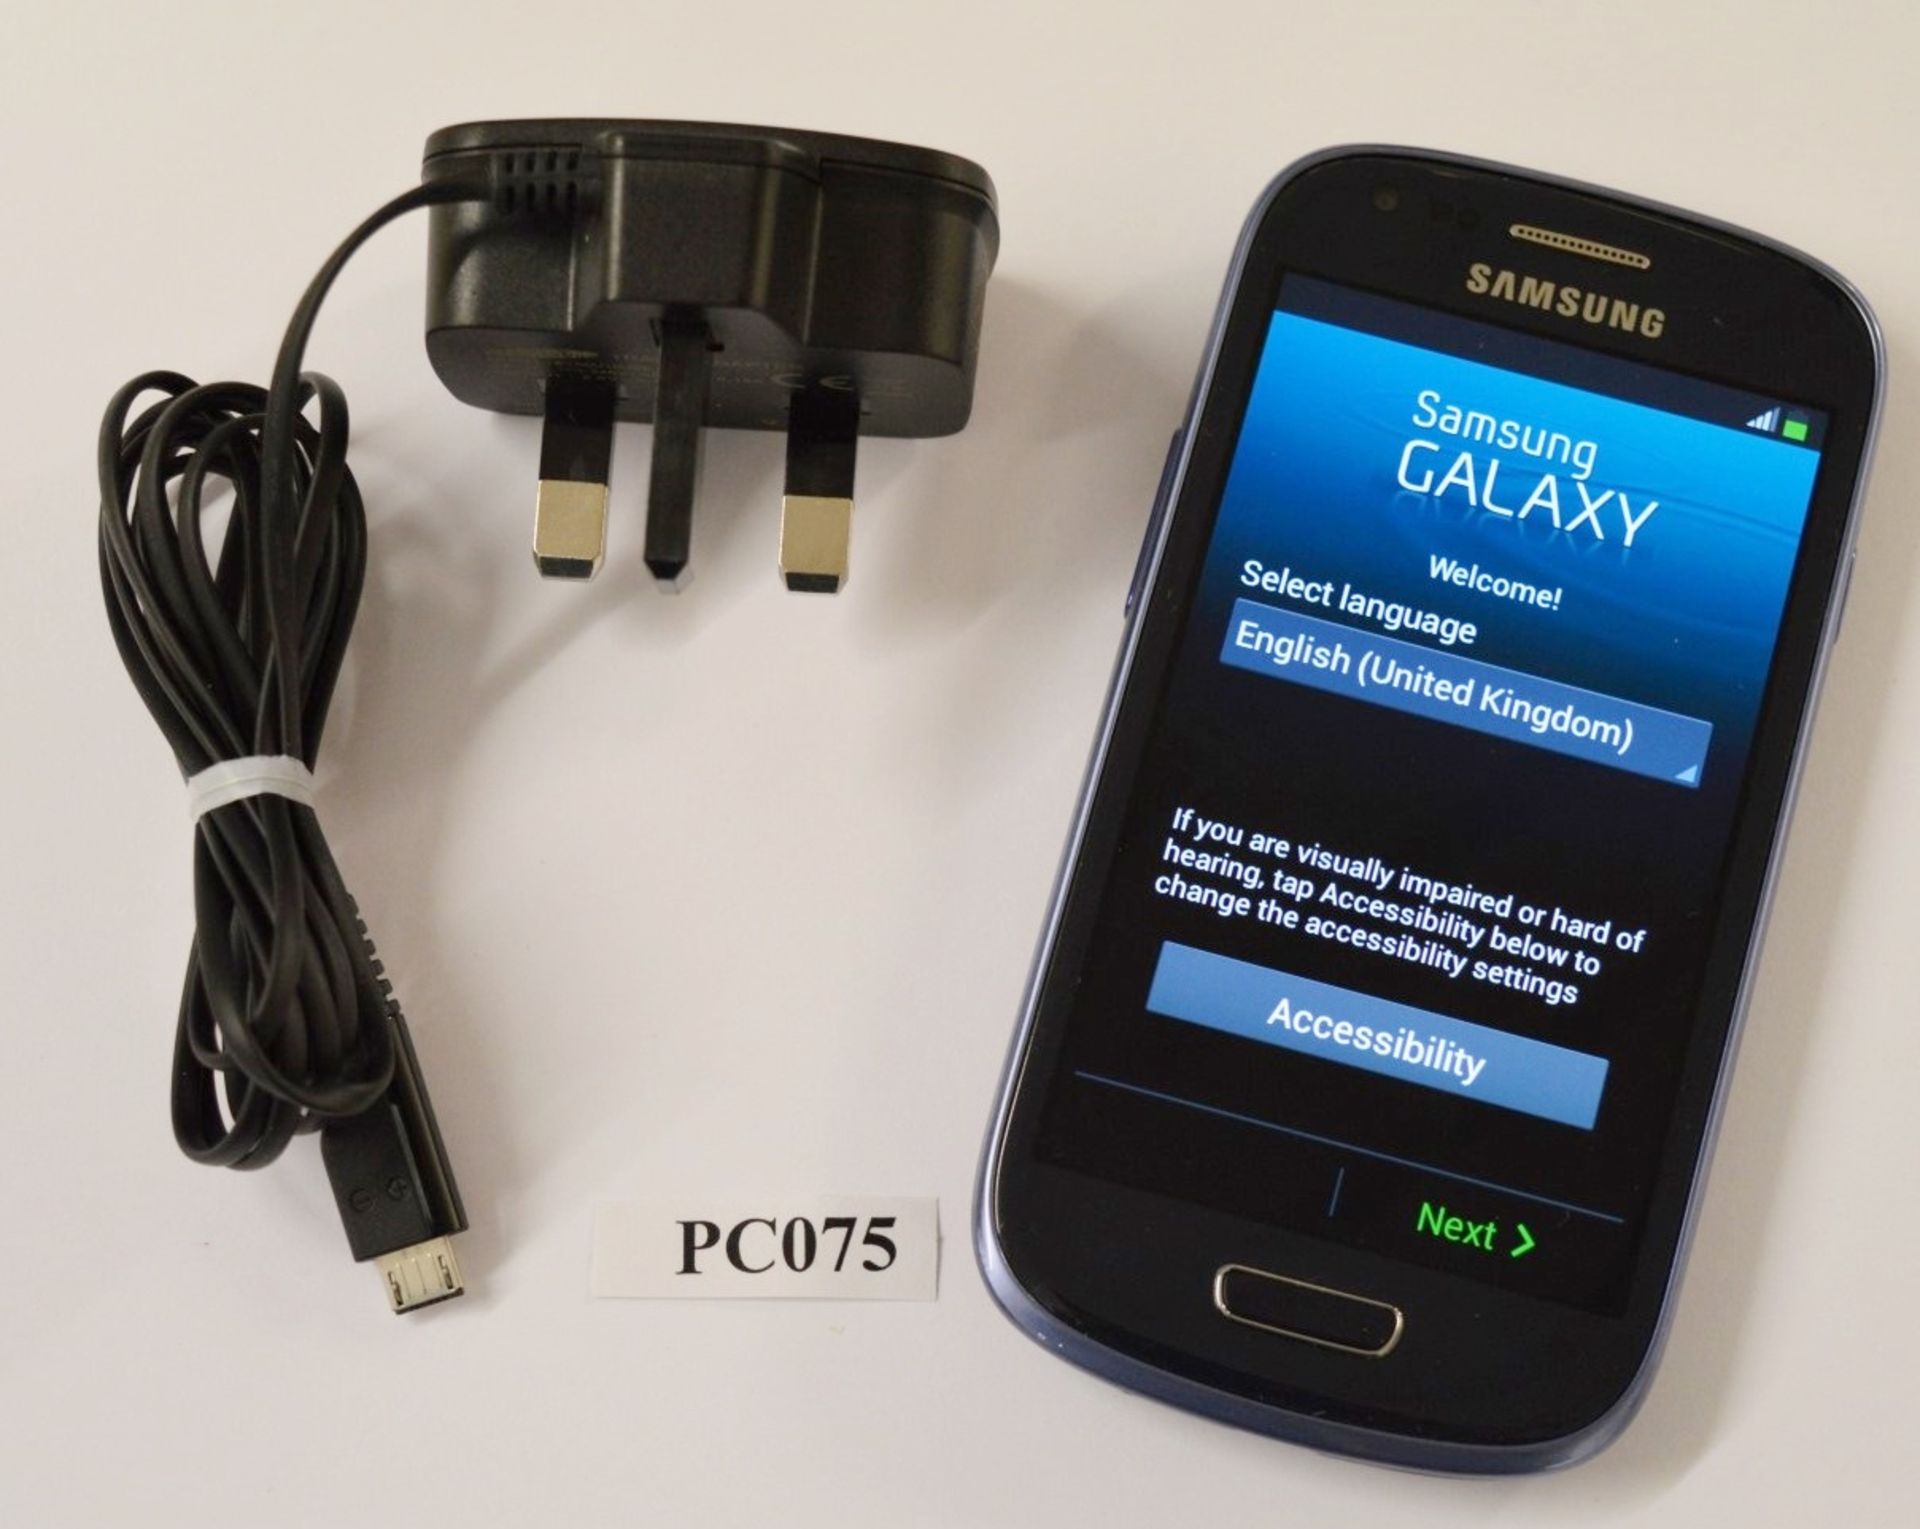 1 x Samsung Galaxy S3 Mini Mobile Phone - Pebble Blue - Features Dual Core 1ghz Processor, 1gb